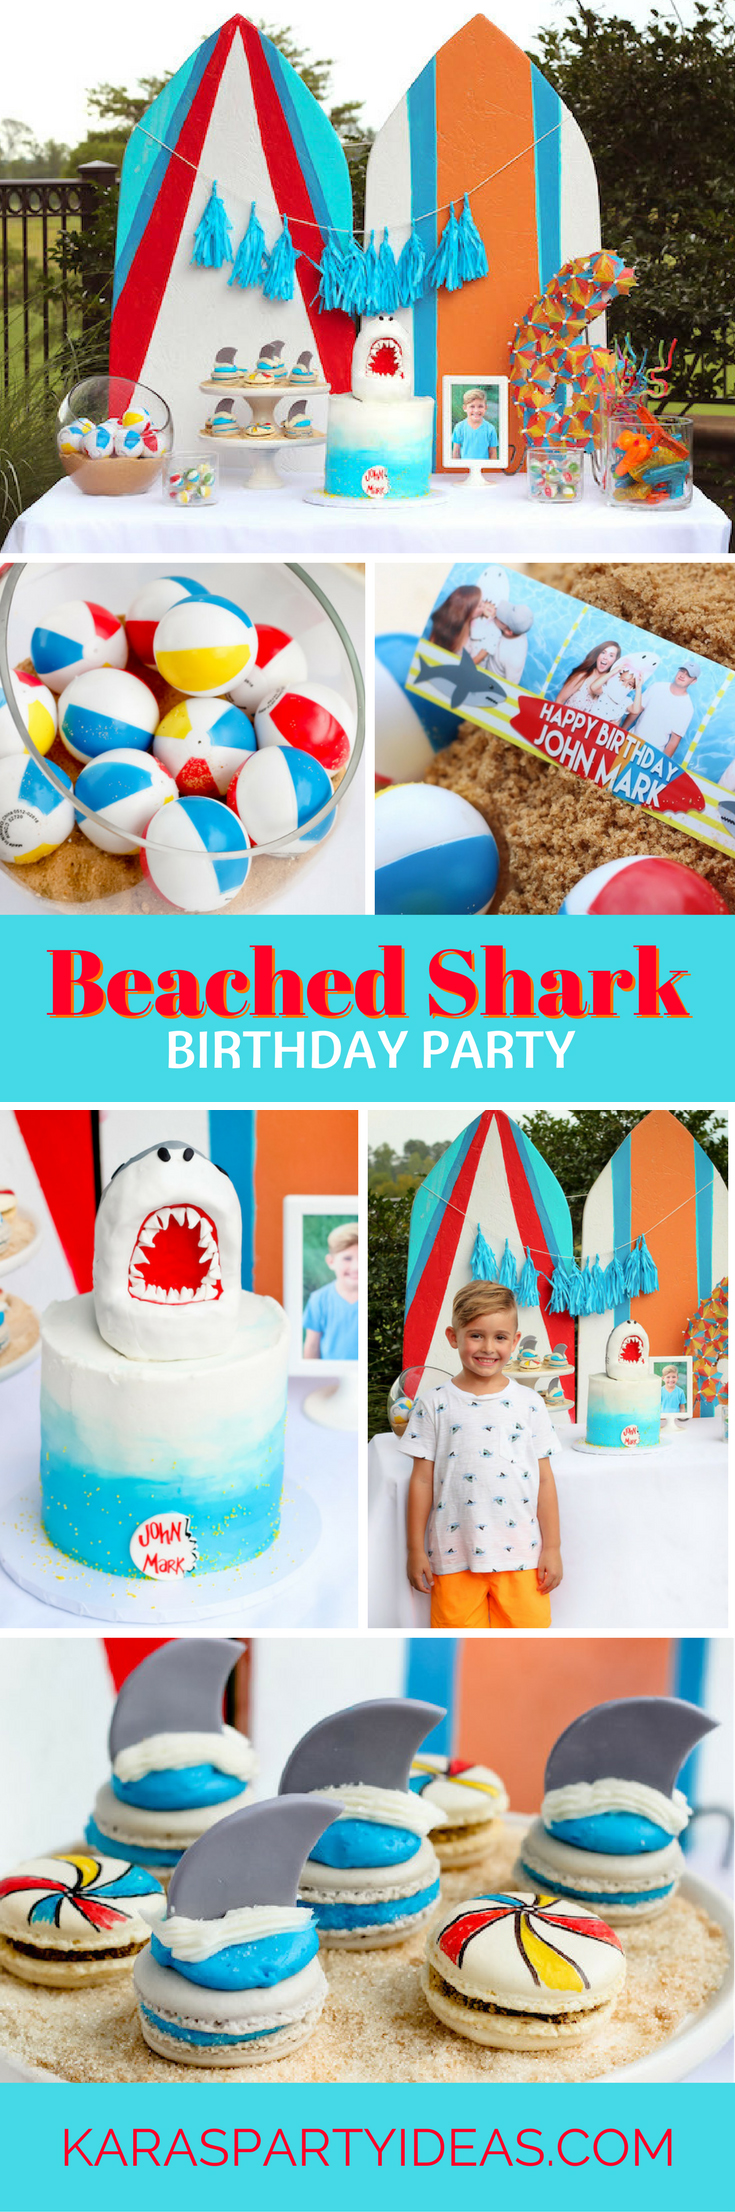 Shark Party Kara's Party Ideas Bash Booth